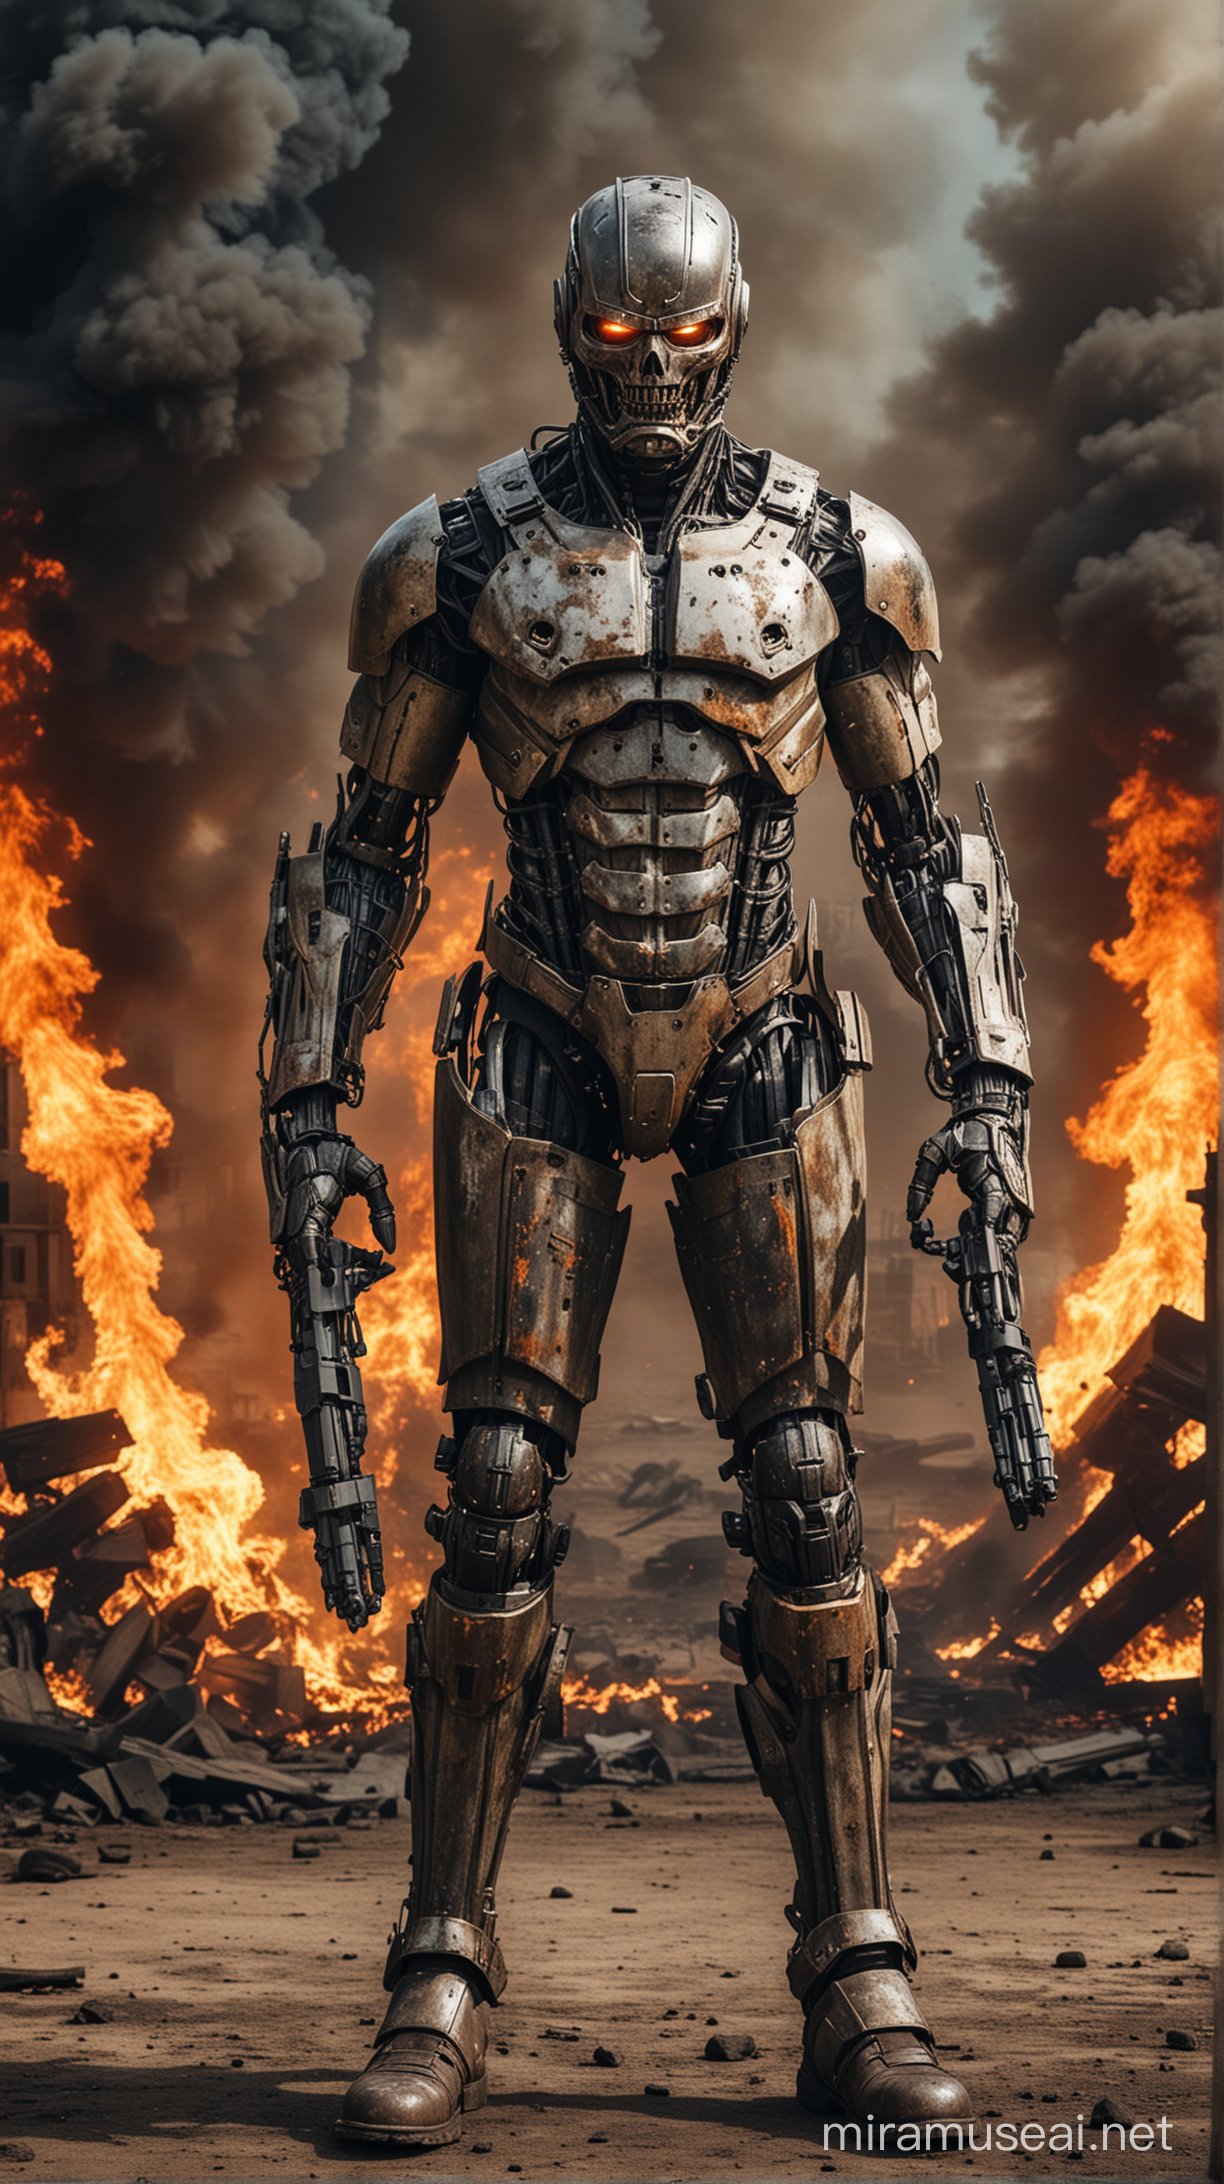 Furious Cyborg Warrior Amidst Burning War and Slavery Scene